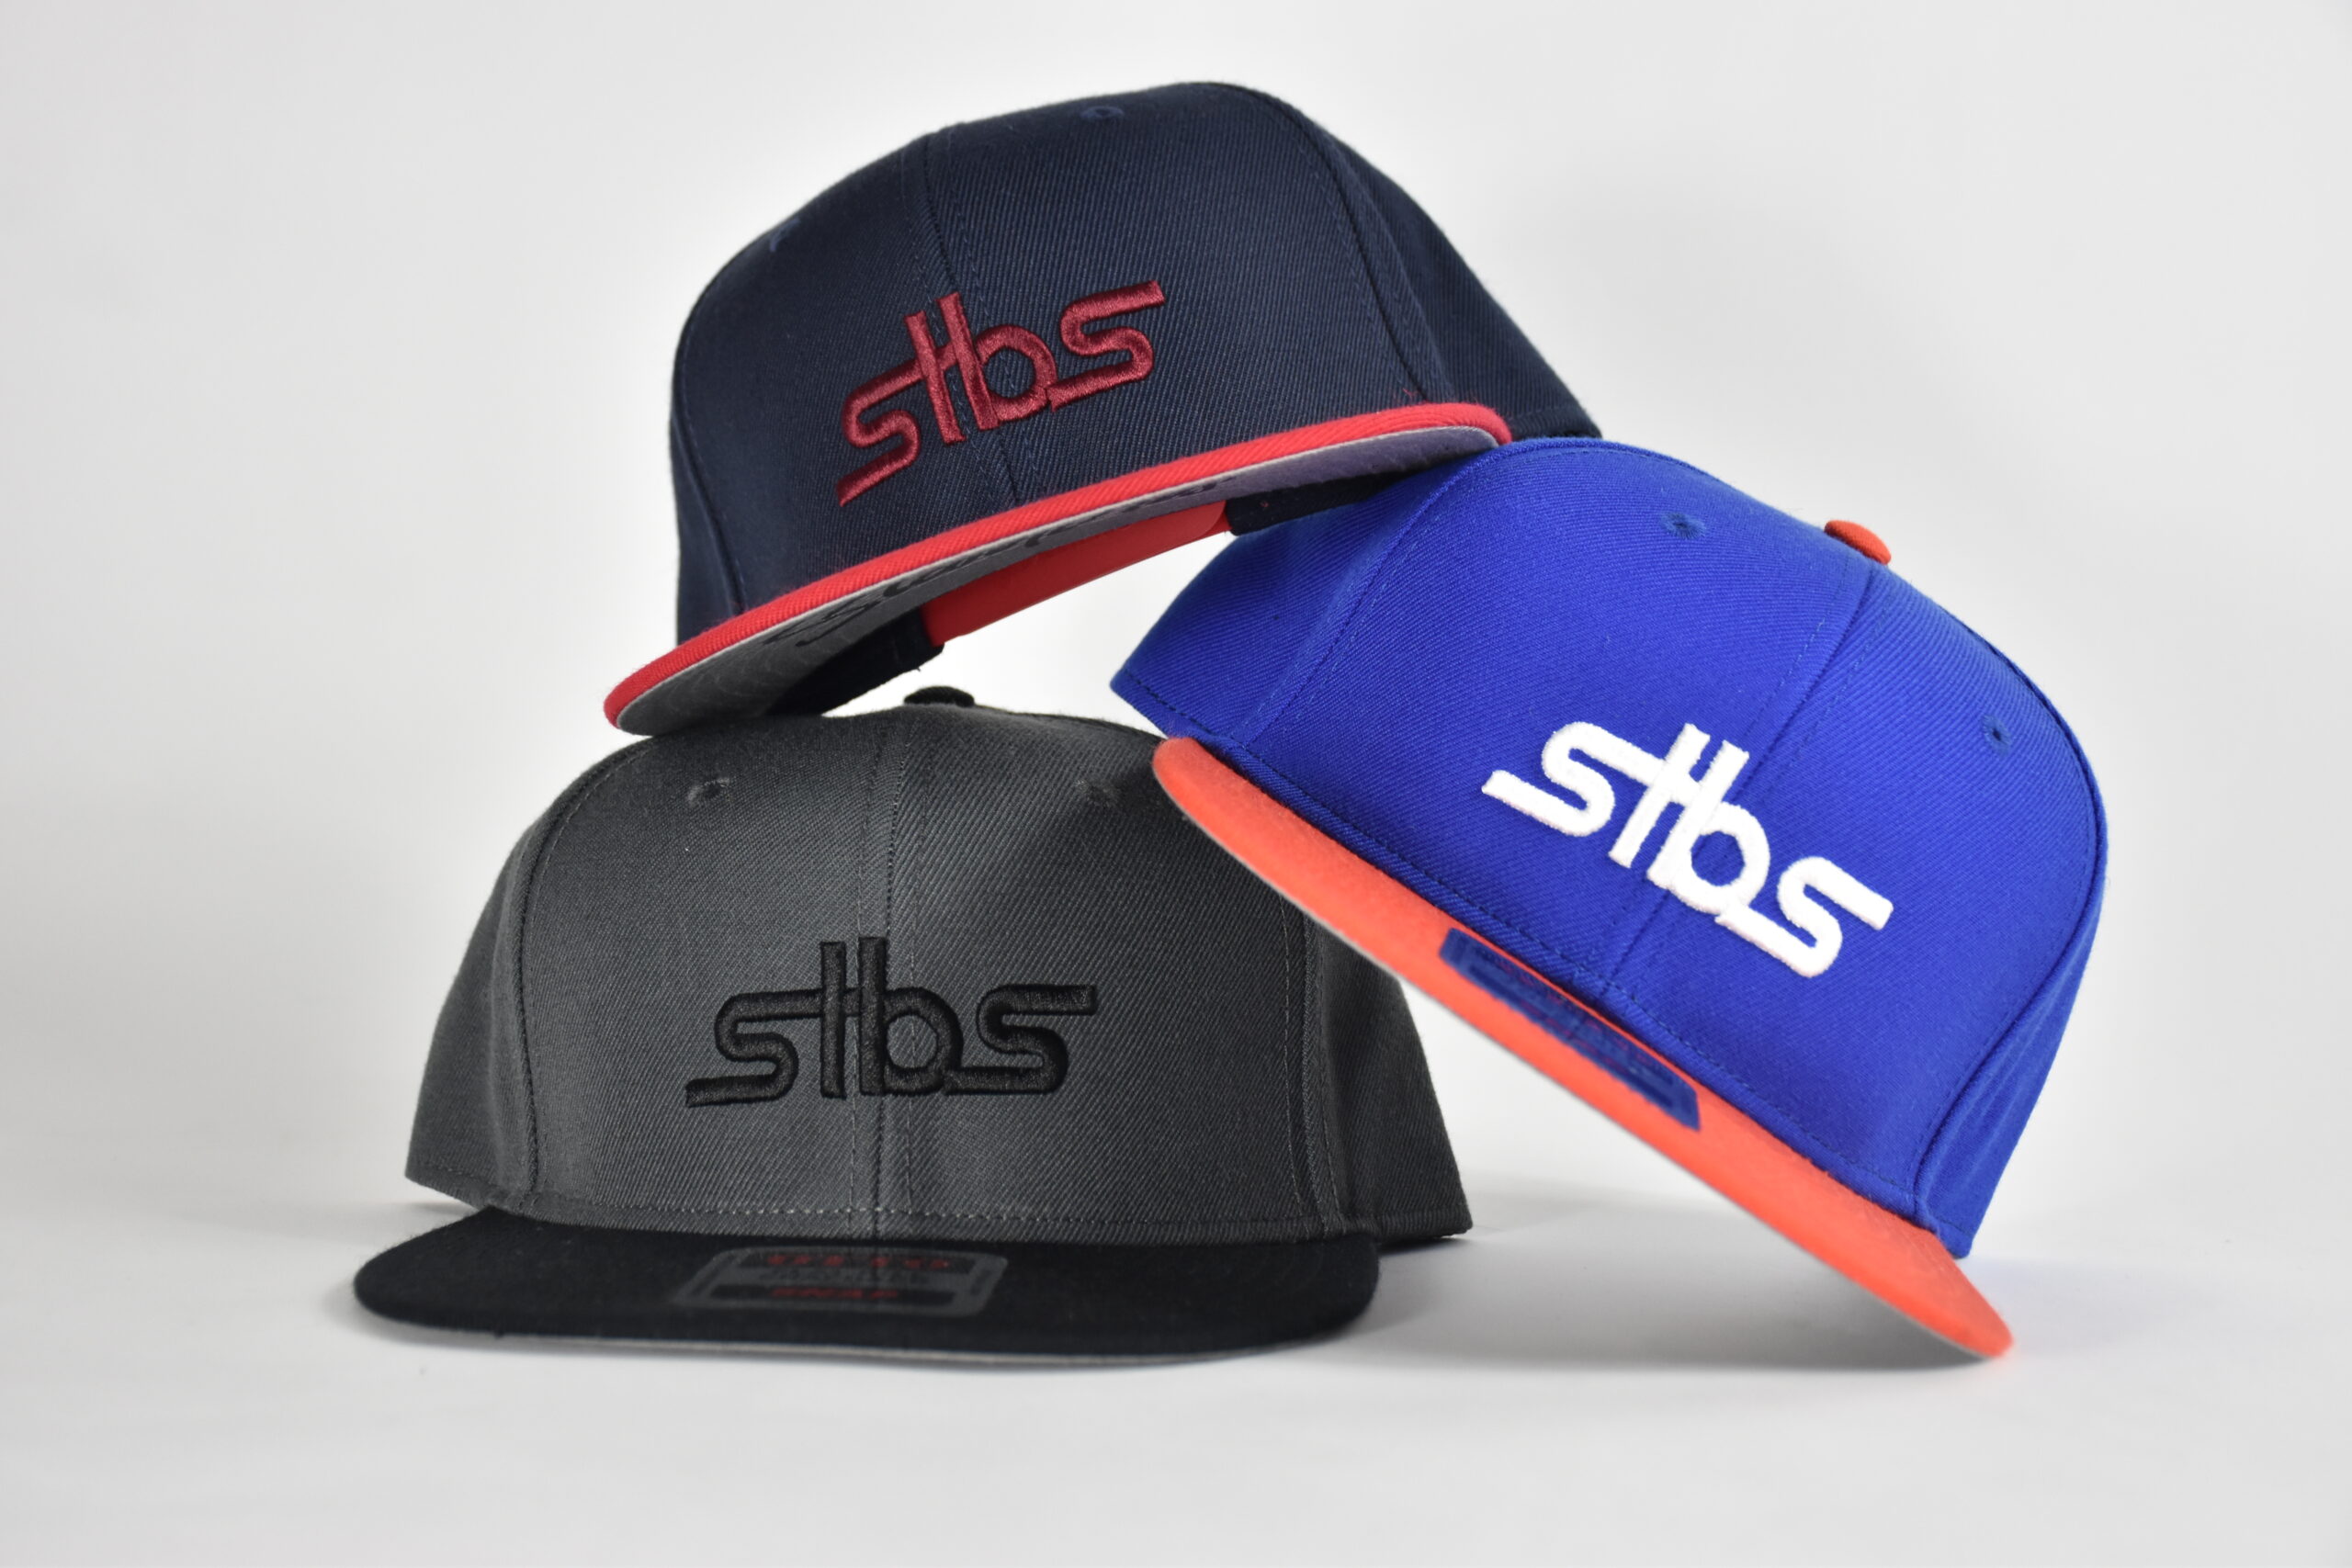 STARRBROS_STBZ_CAP